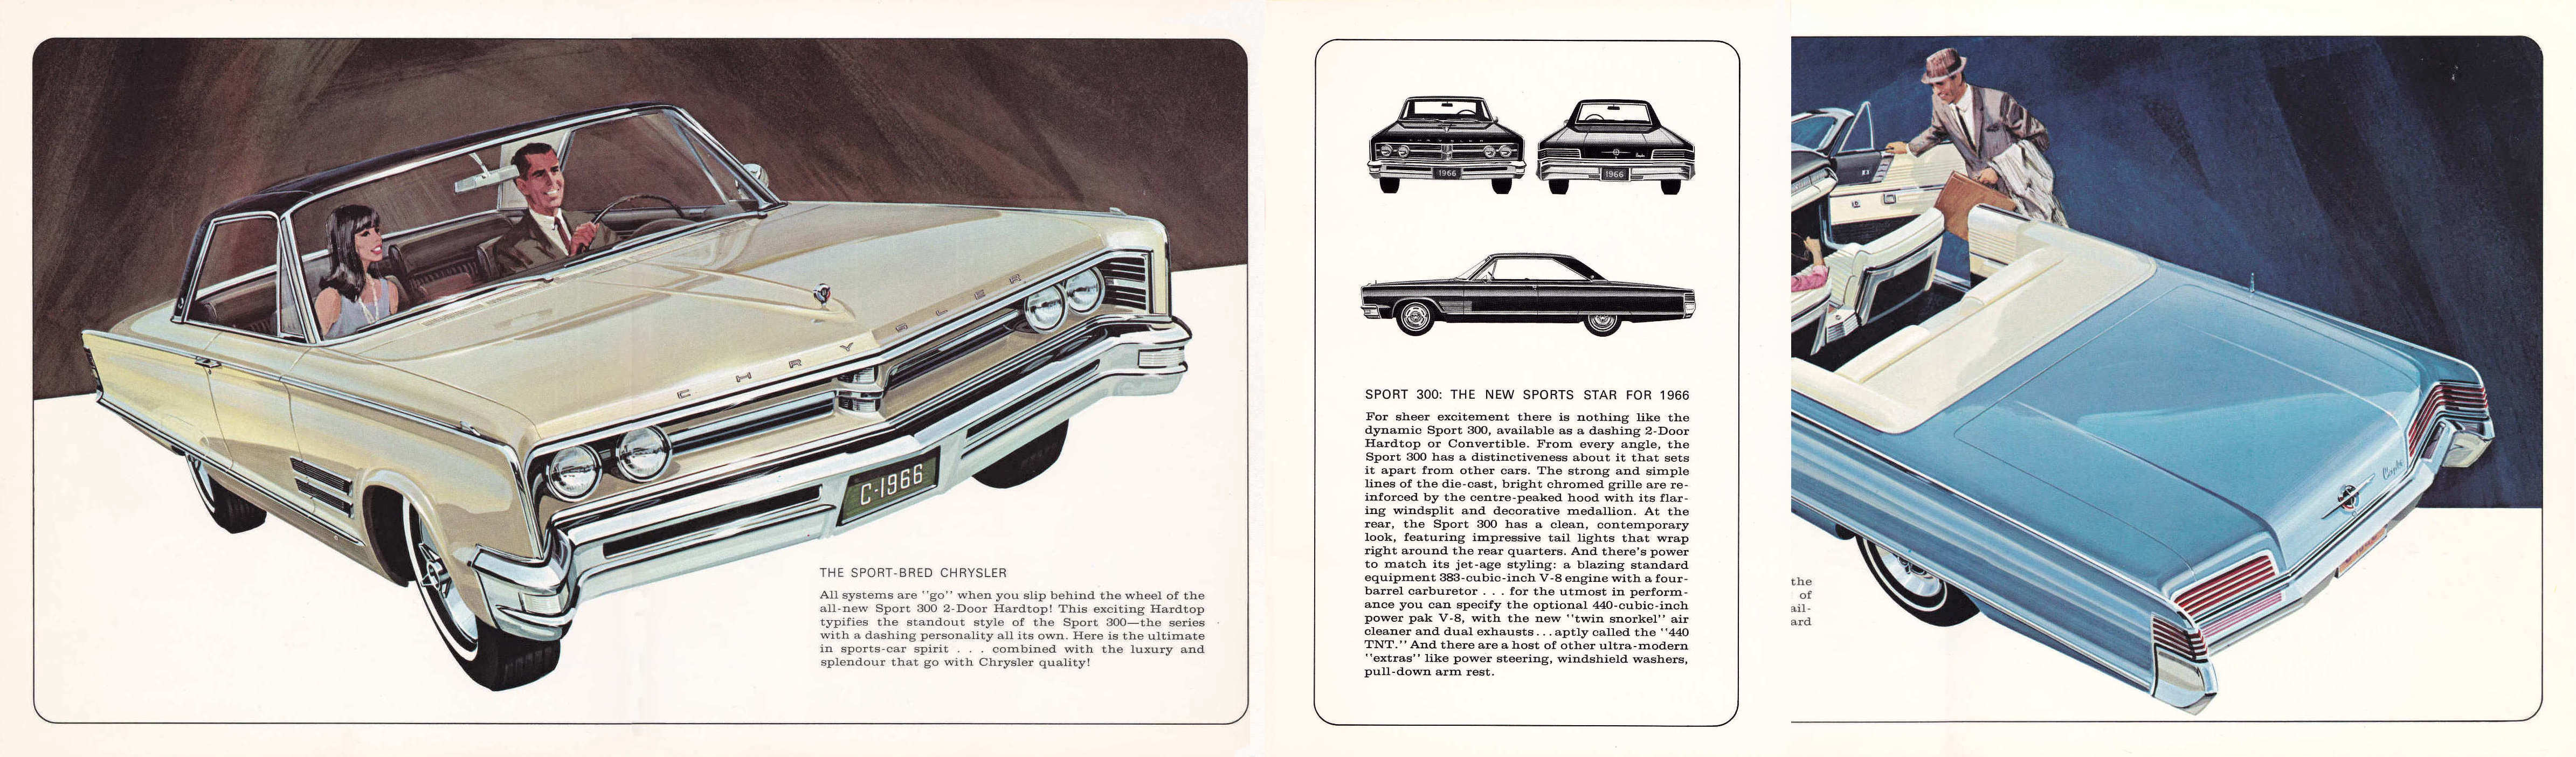 1966_Chrysler_Cdn-06-07a